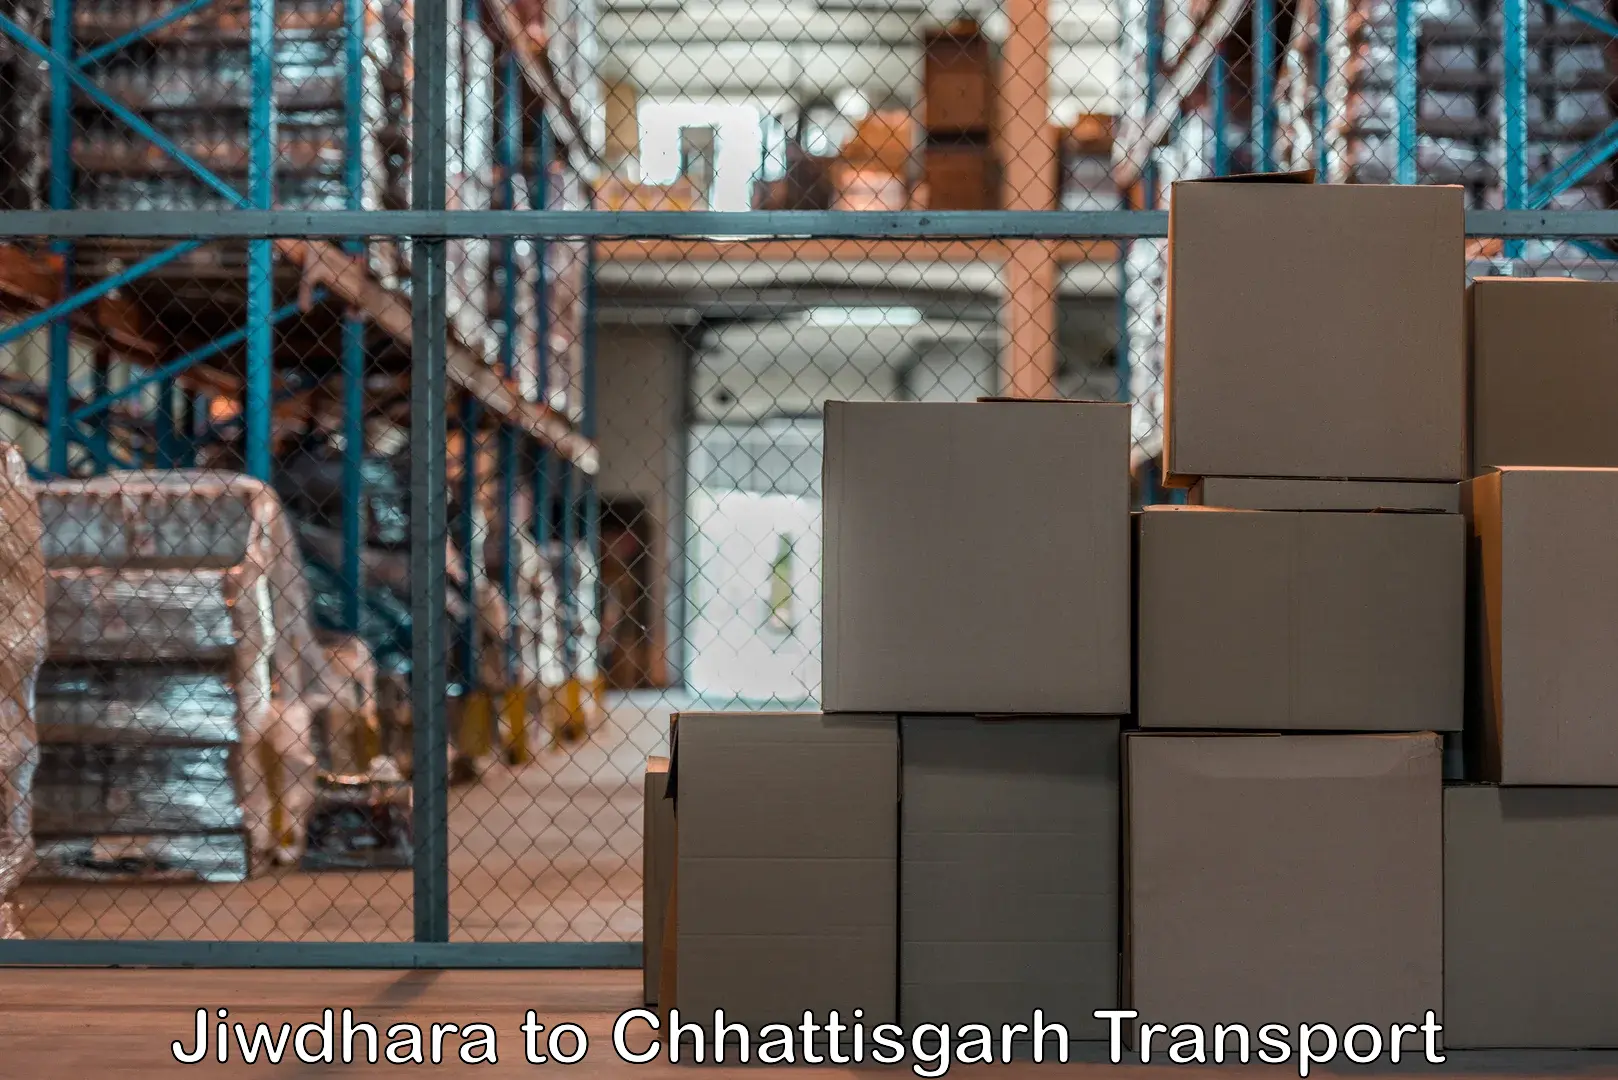 Part load transport service in India Jiwdhara to bagbahra